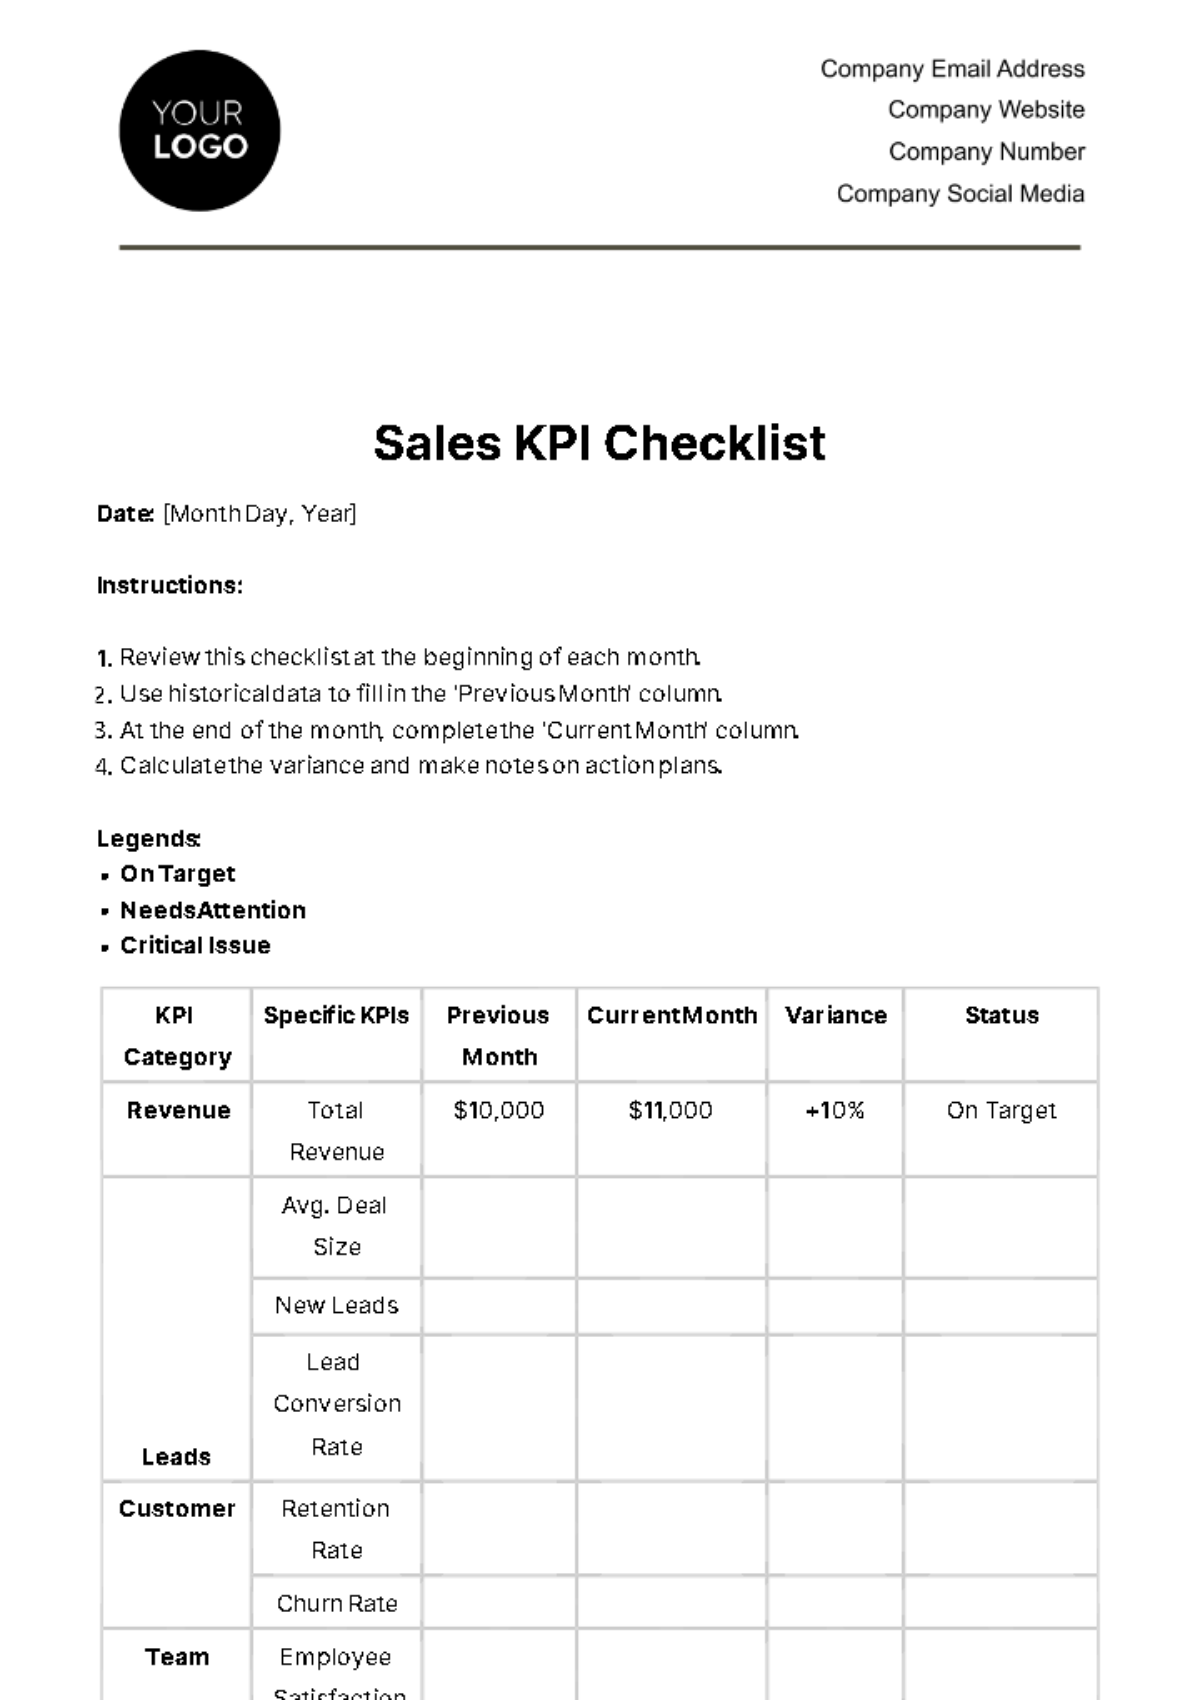 Sales KPI Checklist Template